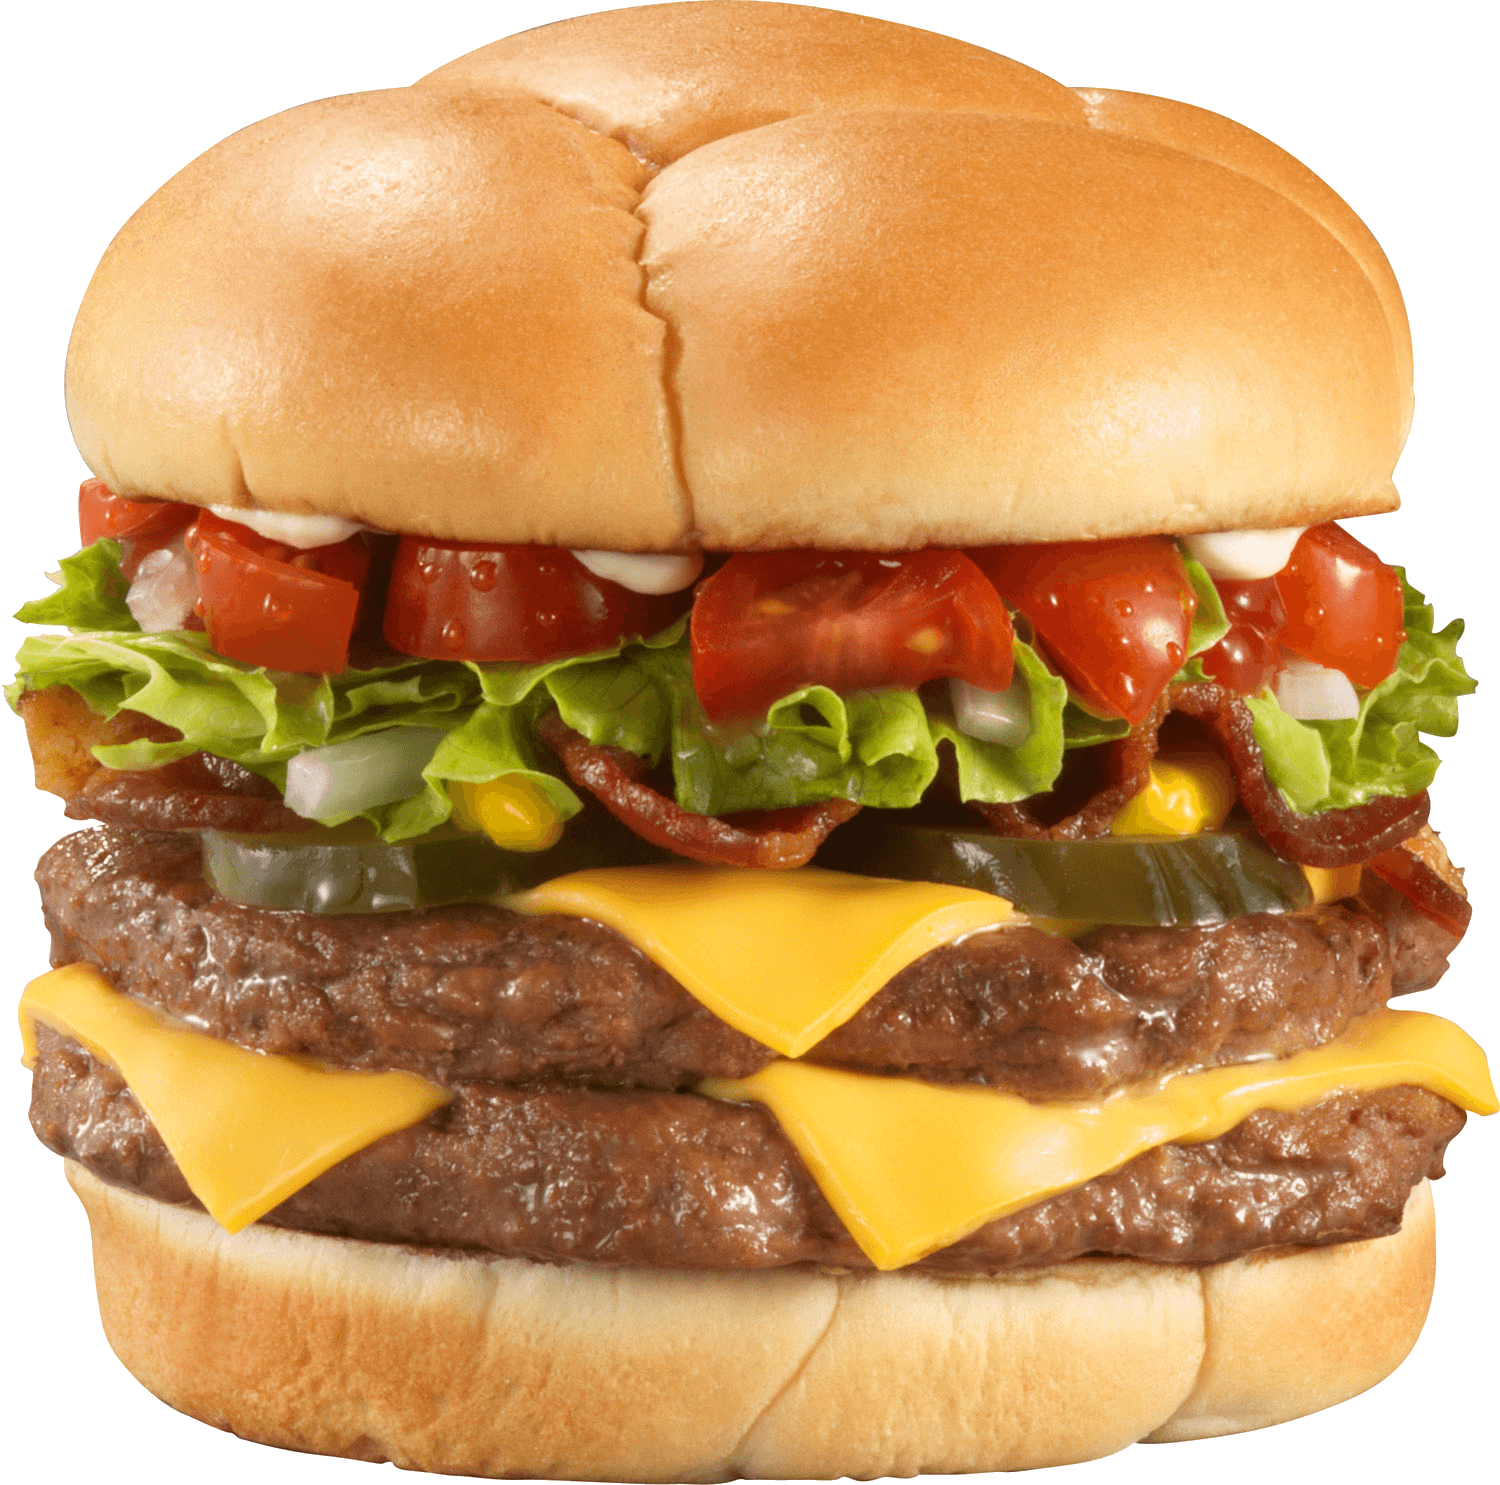 Large Burger Sandwich PNG Image Background